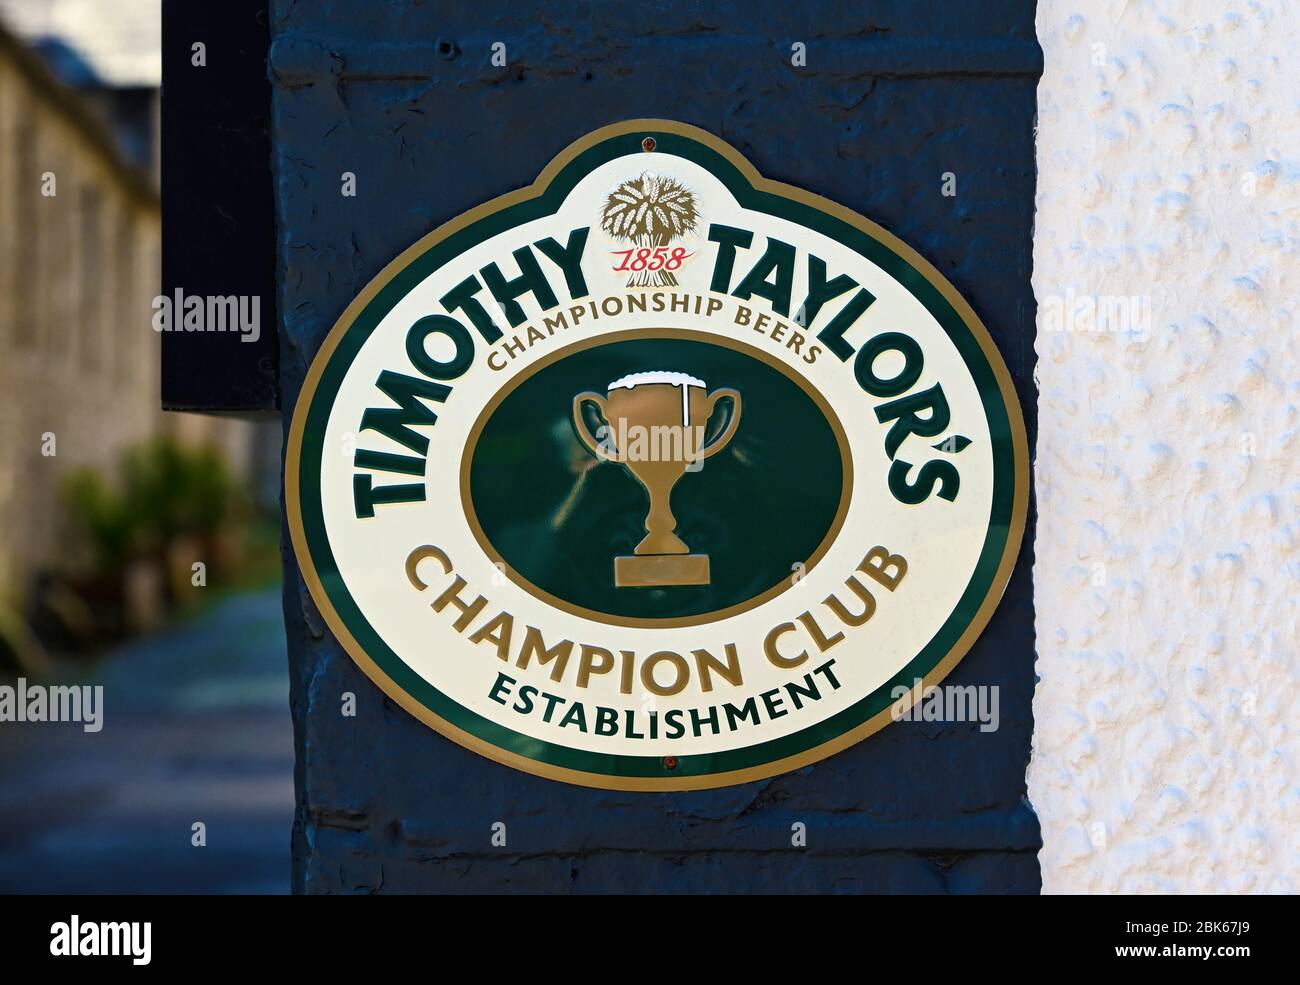 Advertising logo. TimothyTaylor's Championship Beers. Champion Club Establishment. Shakespeare Inn, Highgate, Kendal, Cumbria, England, United Kingdom Stock Photo